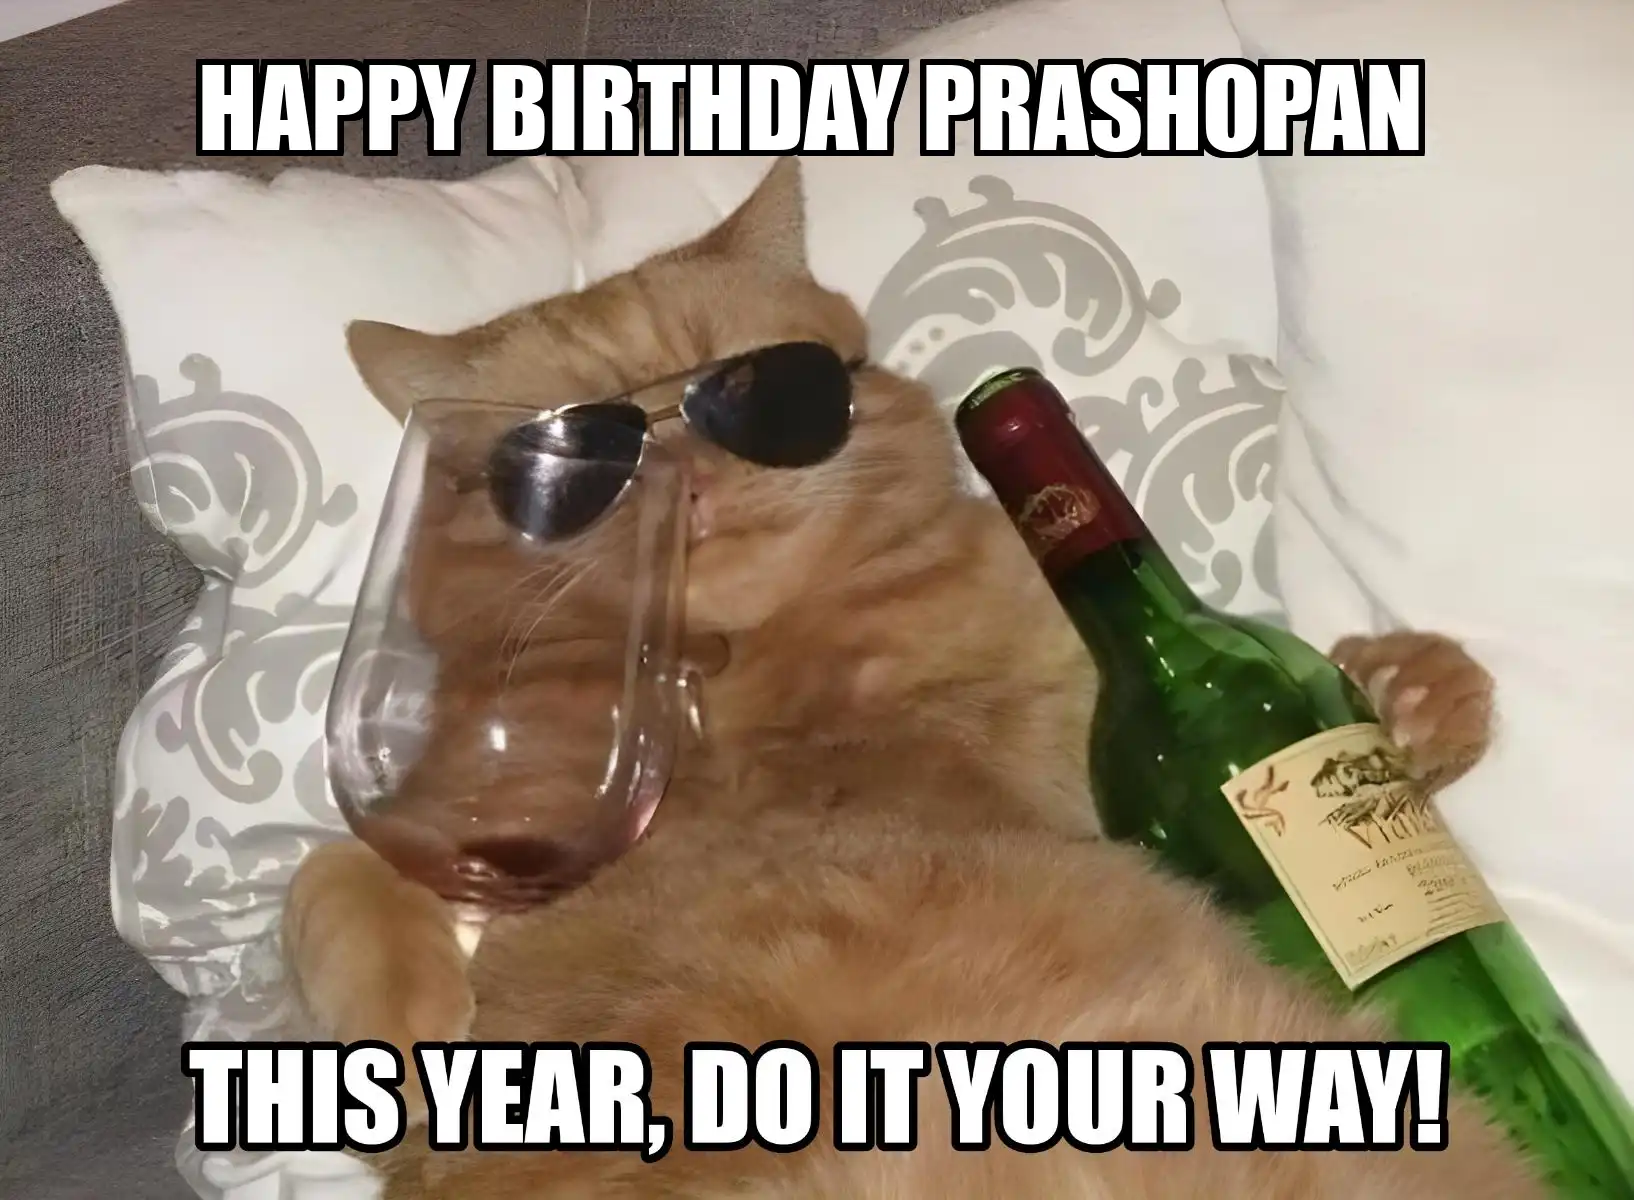 Happy Birthday Prashopan This Year Do It Your Way Meme